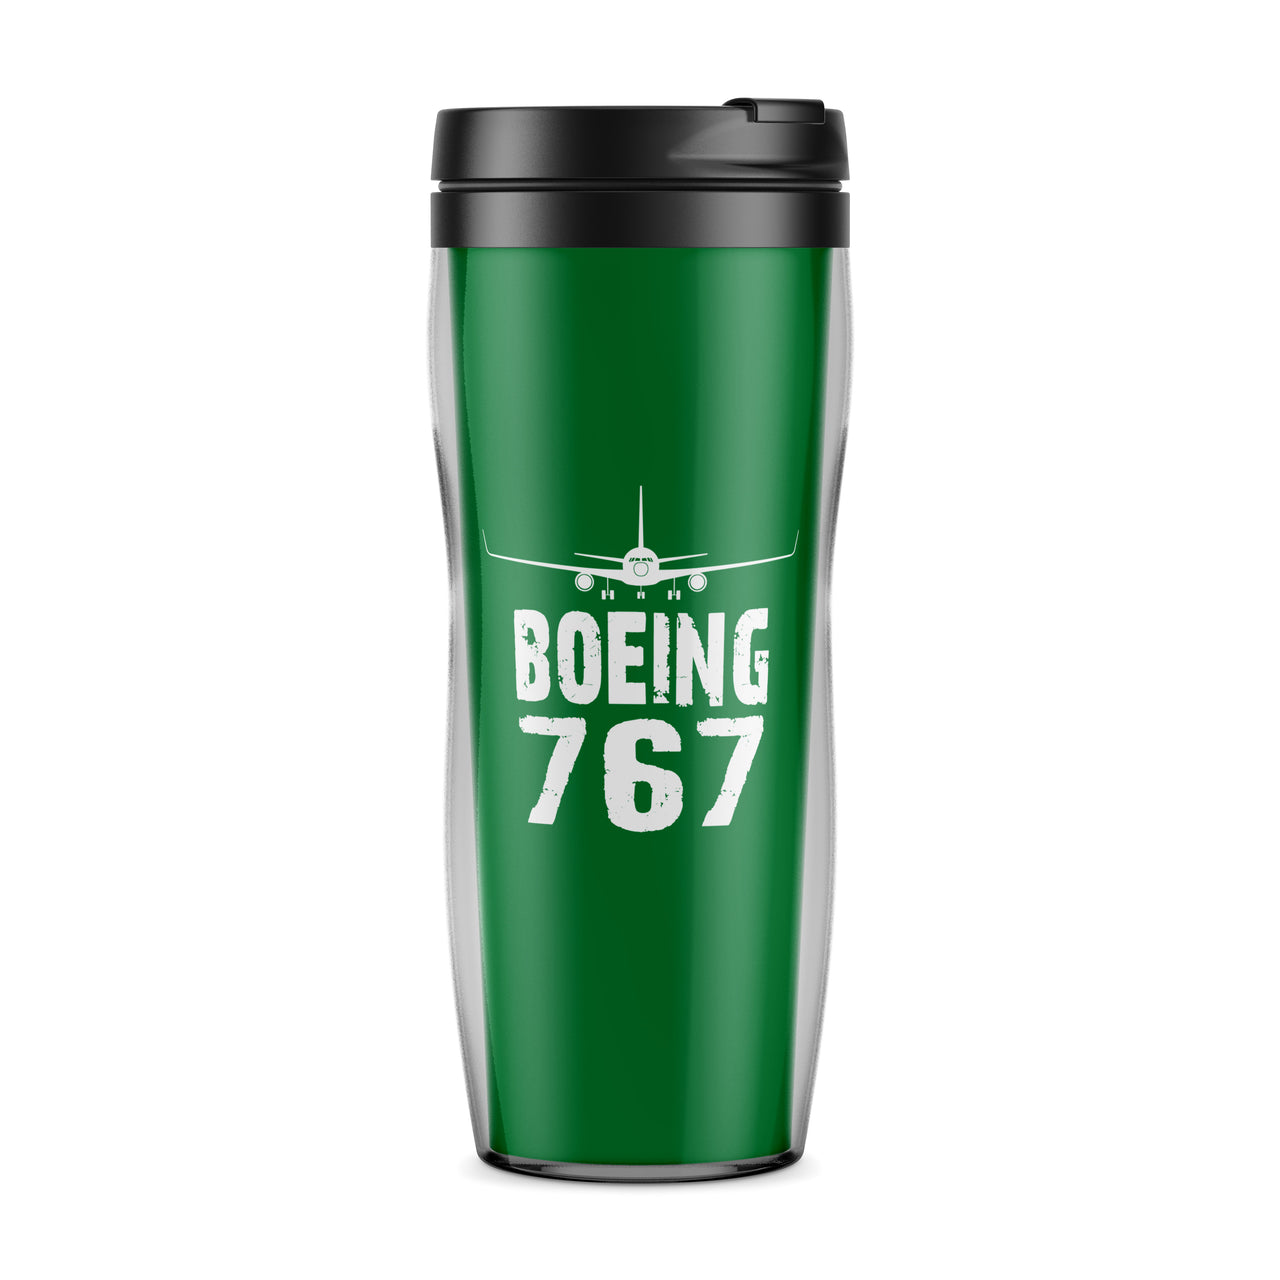 Boeing 767 & Plane Designed Travel Mugs